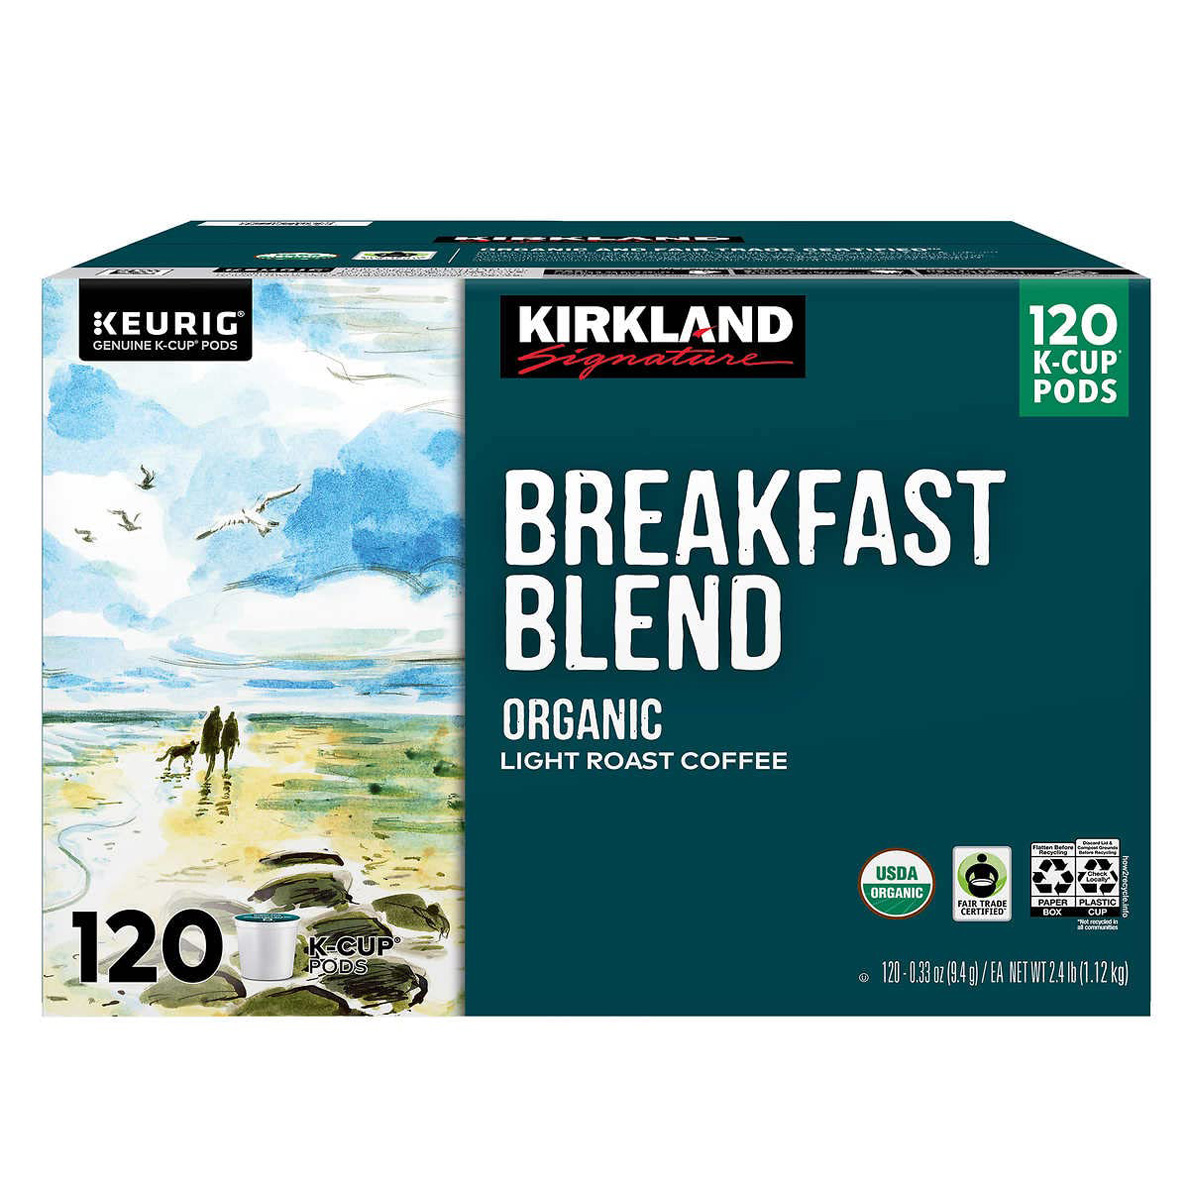 Kirkland Signature Organic Breakfast Blend Light-Roast Coffee, K-Cup Pods